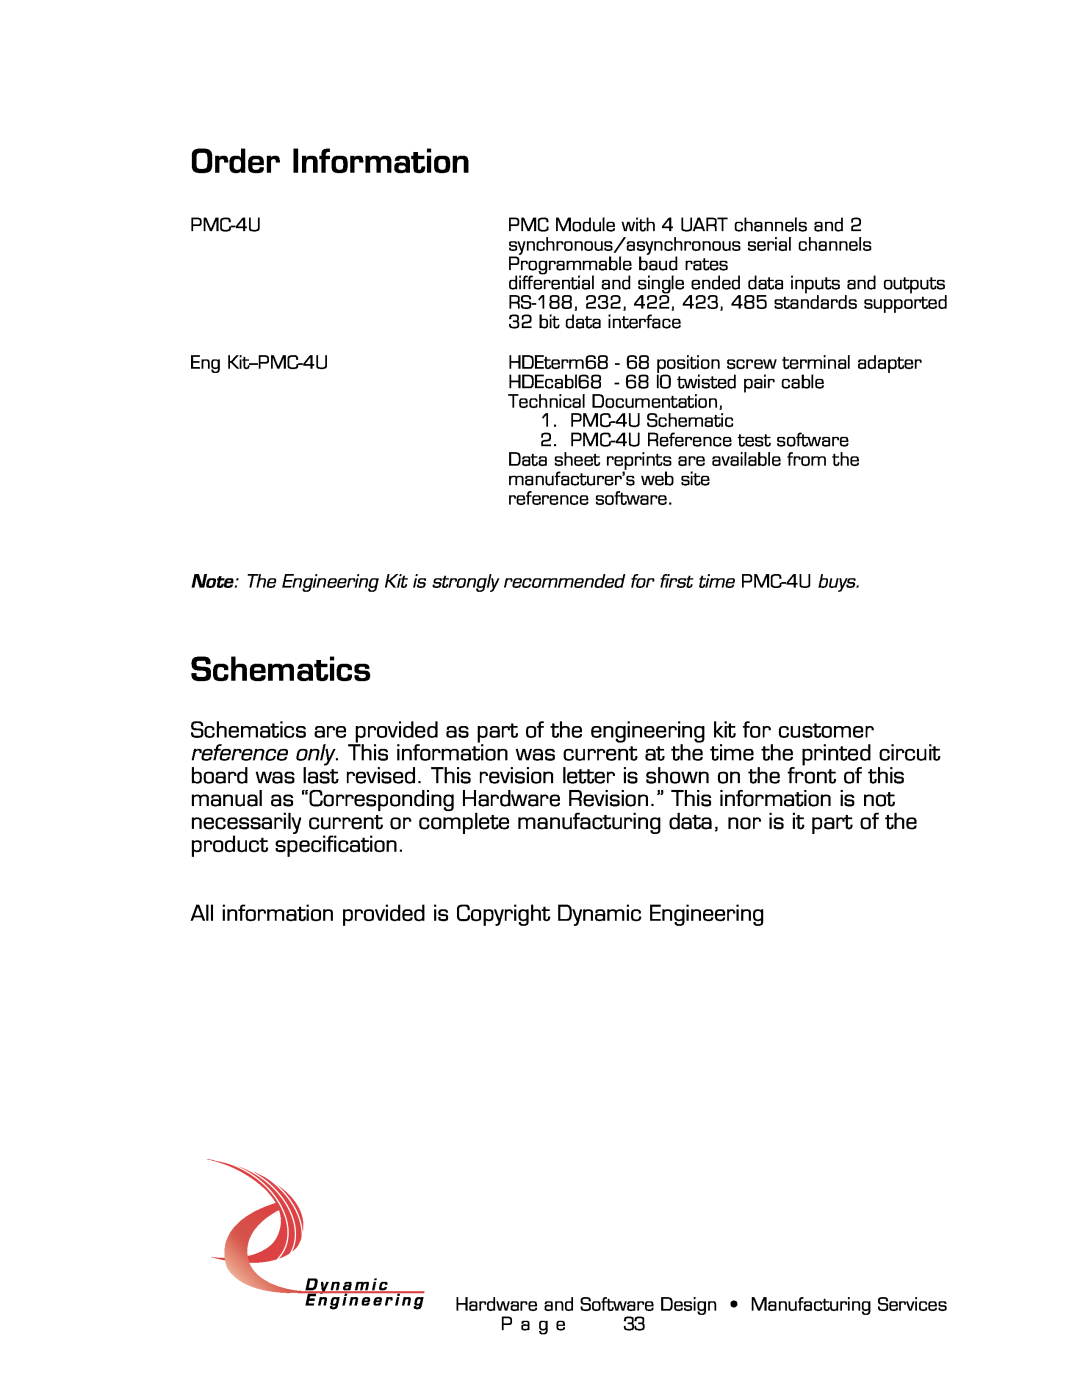 American Dynamics PMC-4U-CACI user manual Order Information, Schematics 